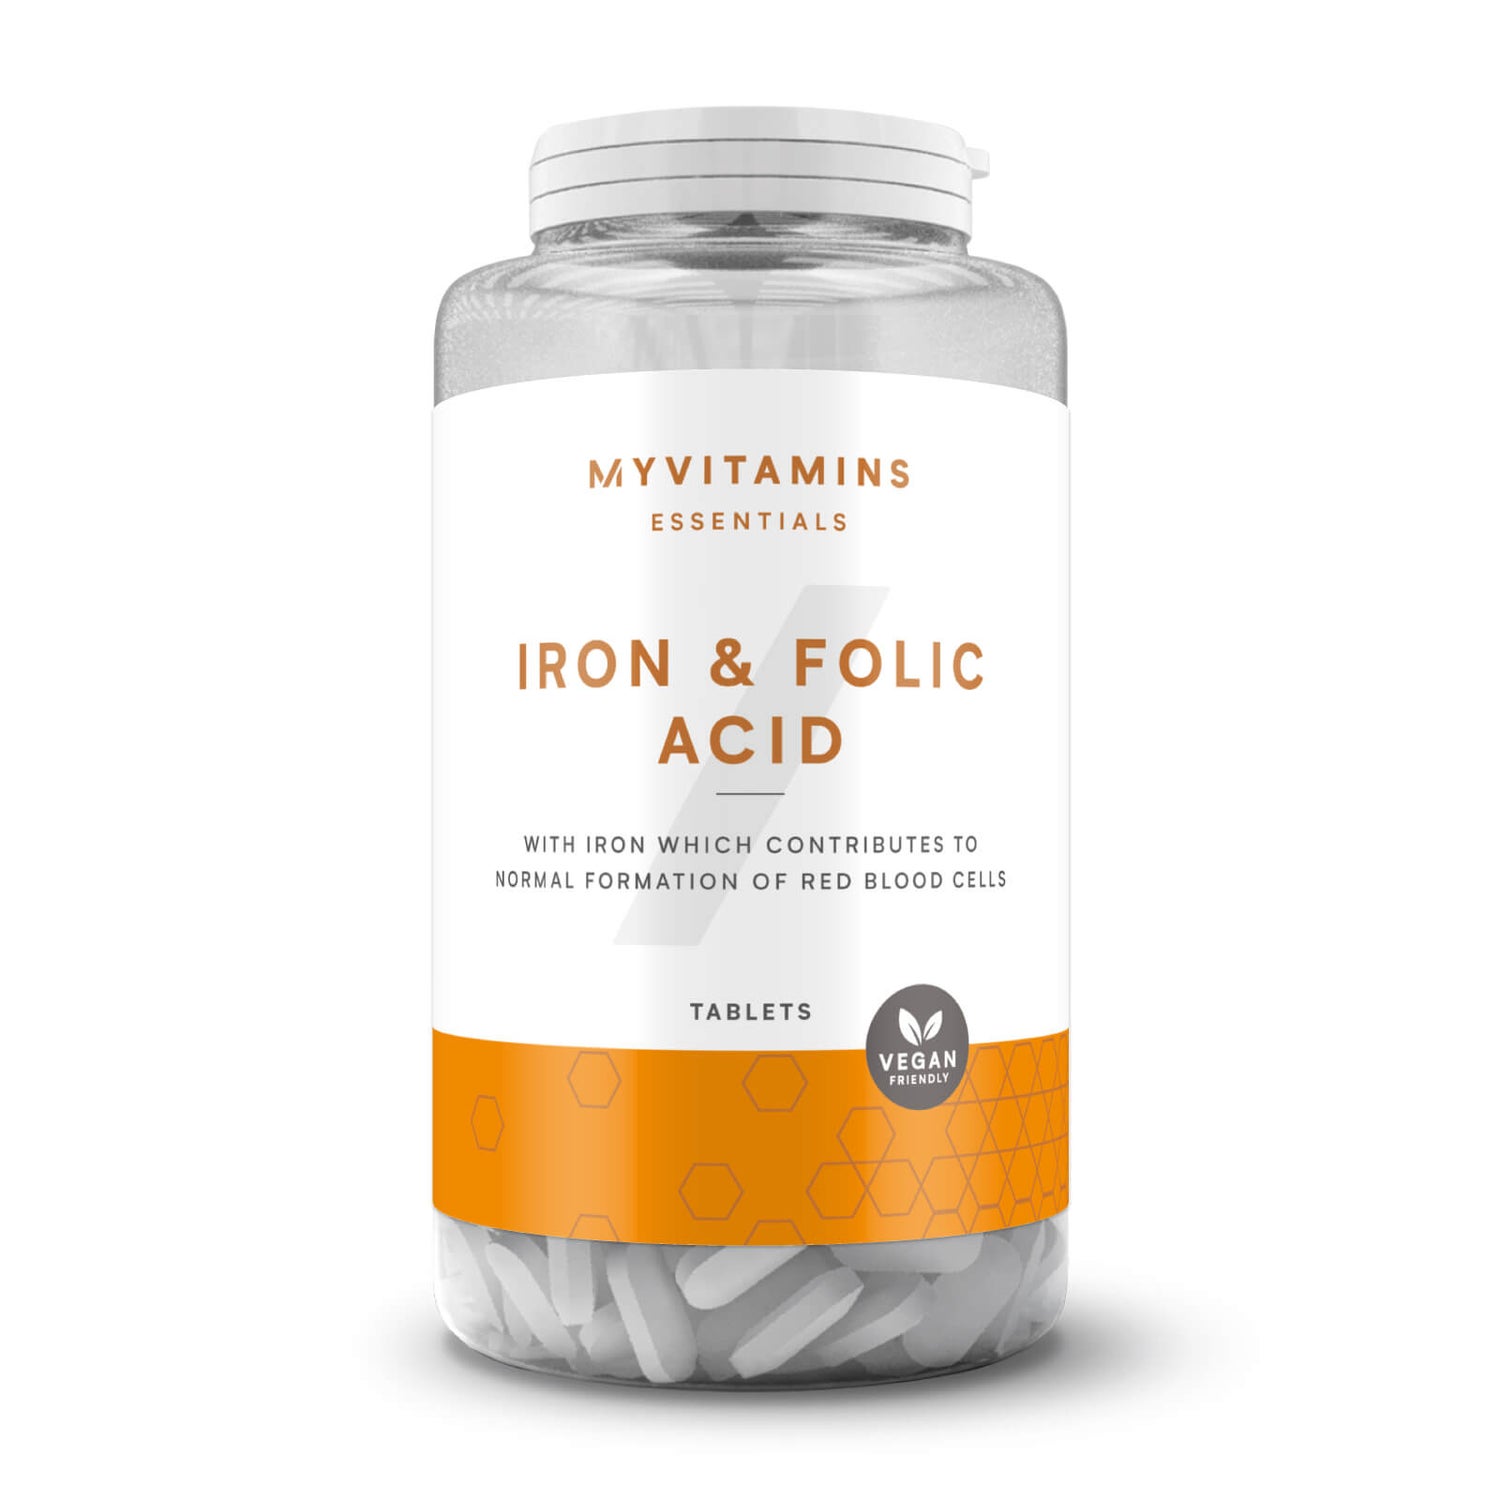 Myvitamins Iron & Folic Acid Tablet